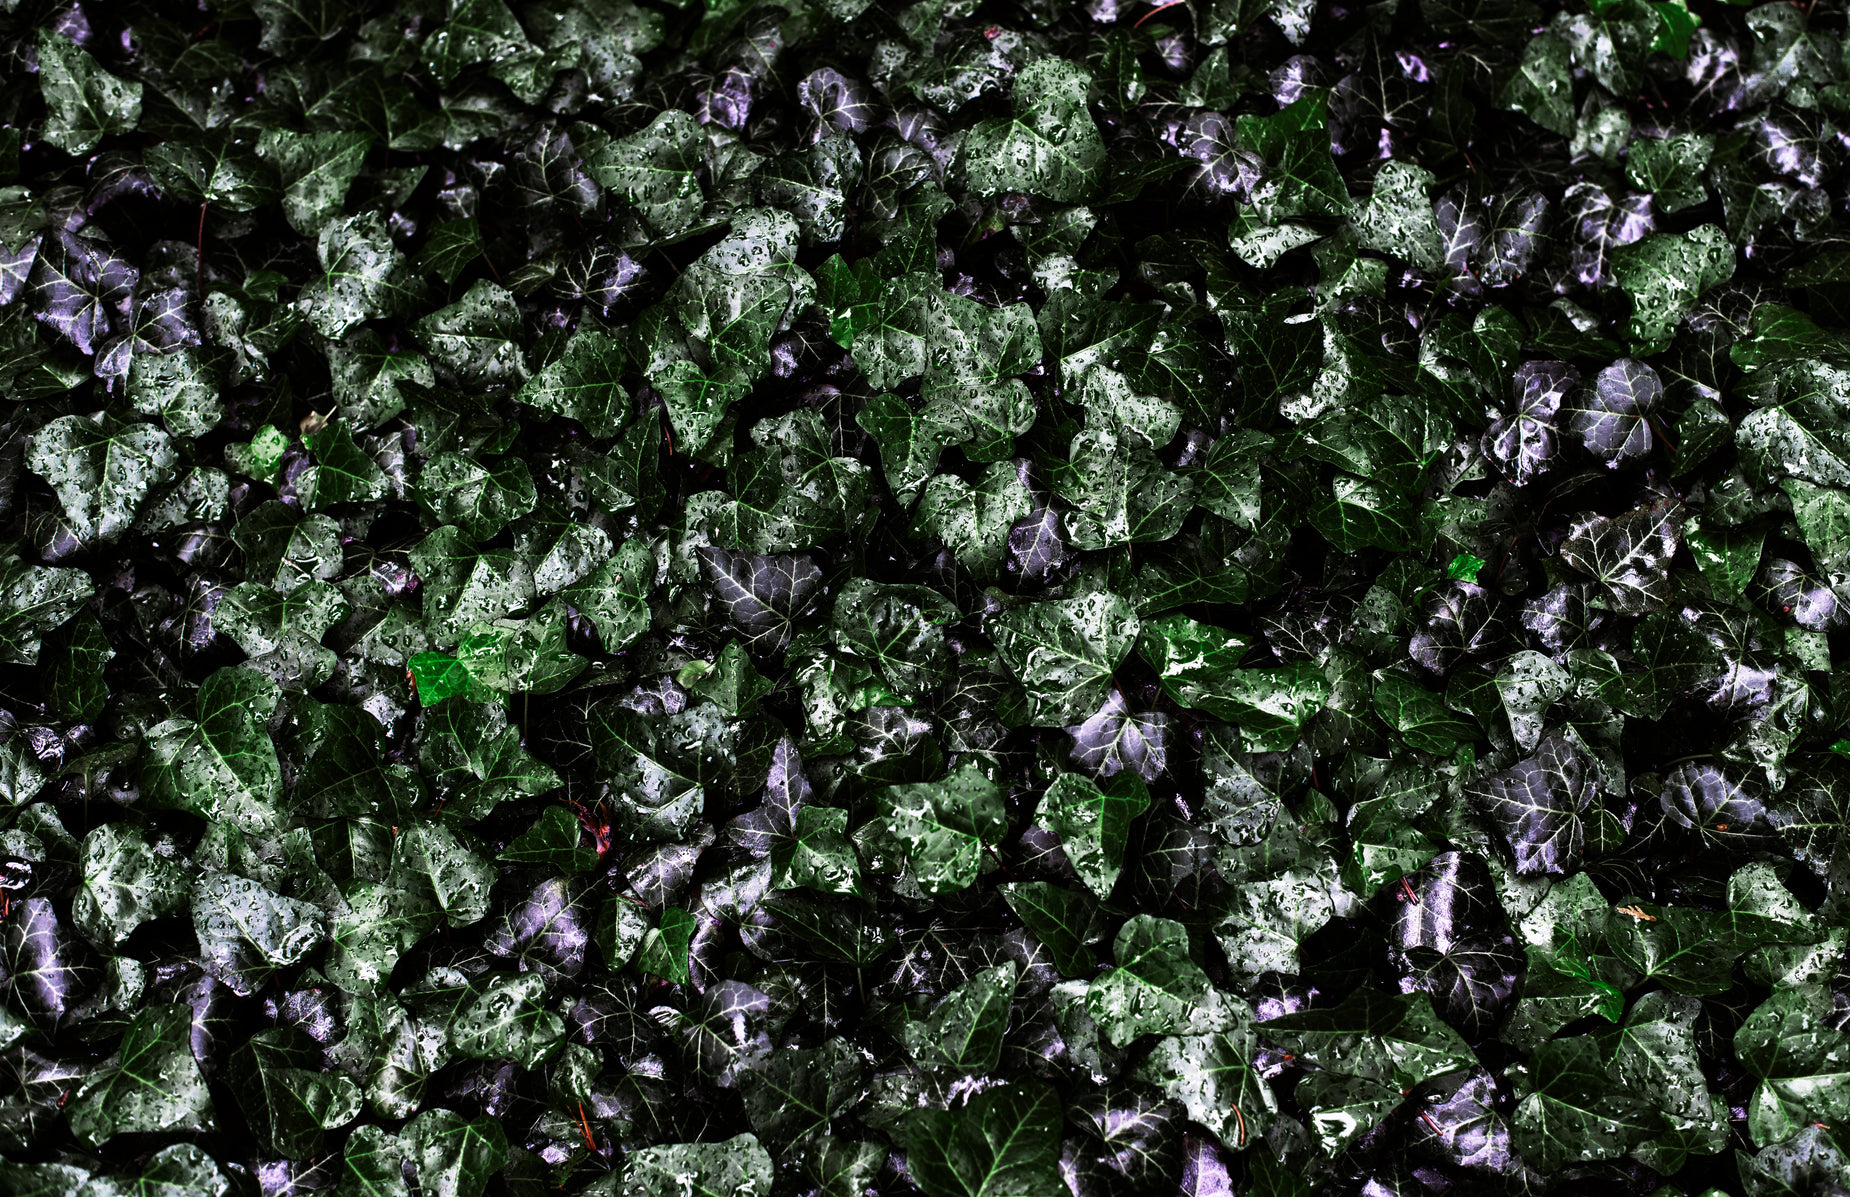 close up view of dark green, metallic leaves